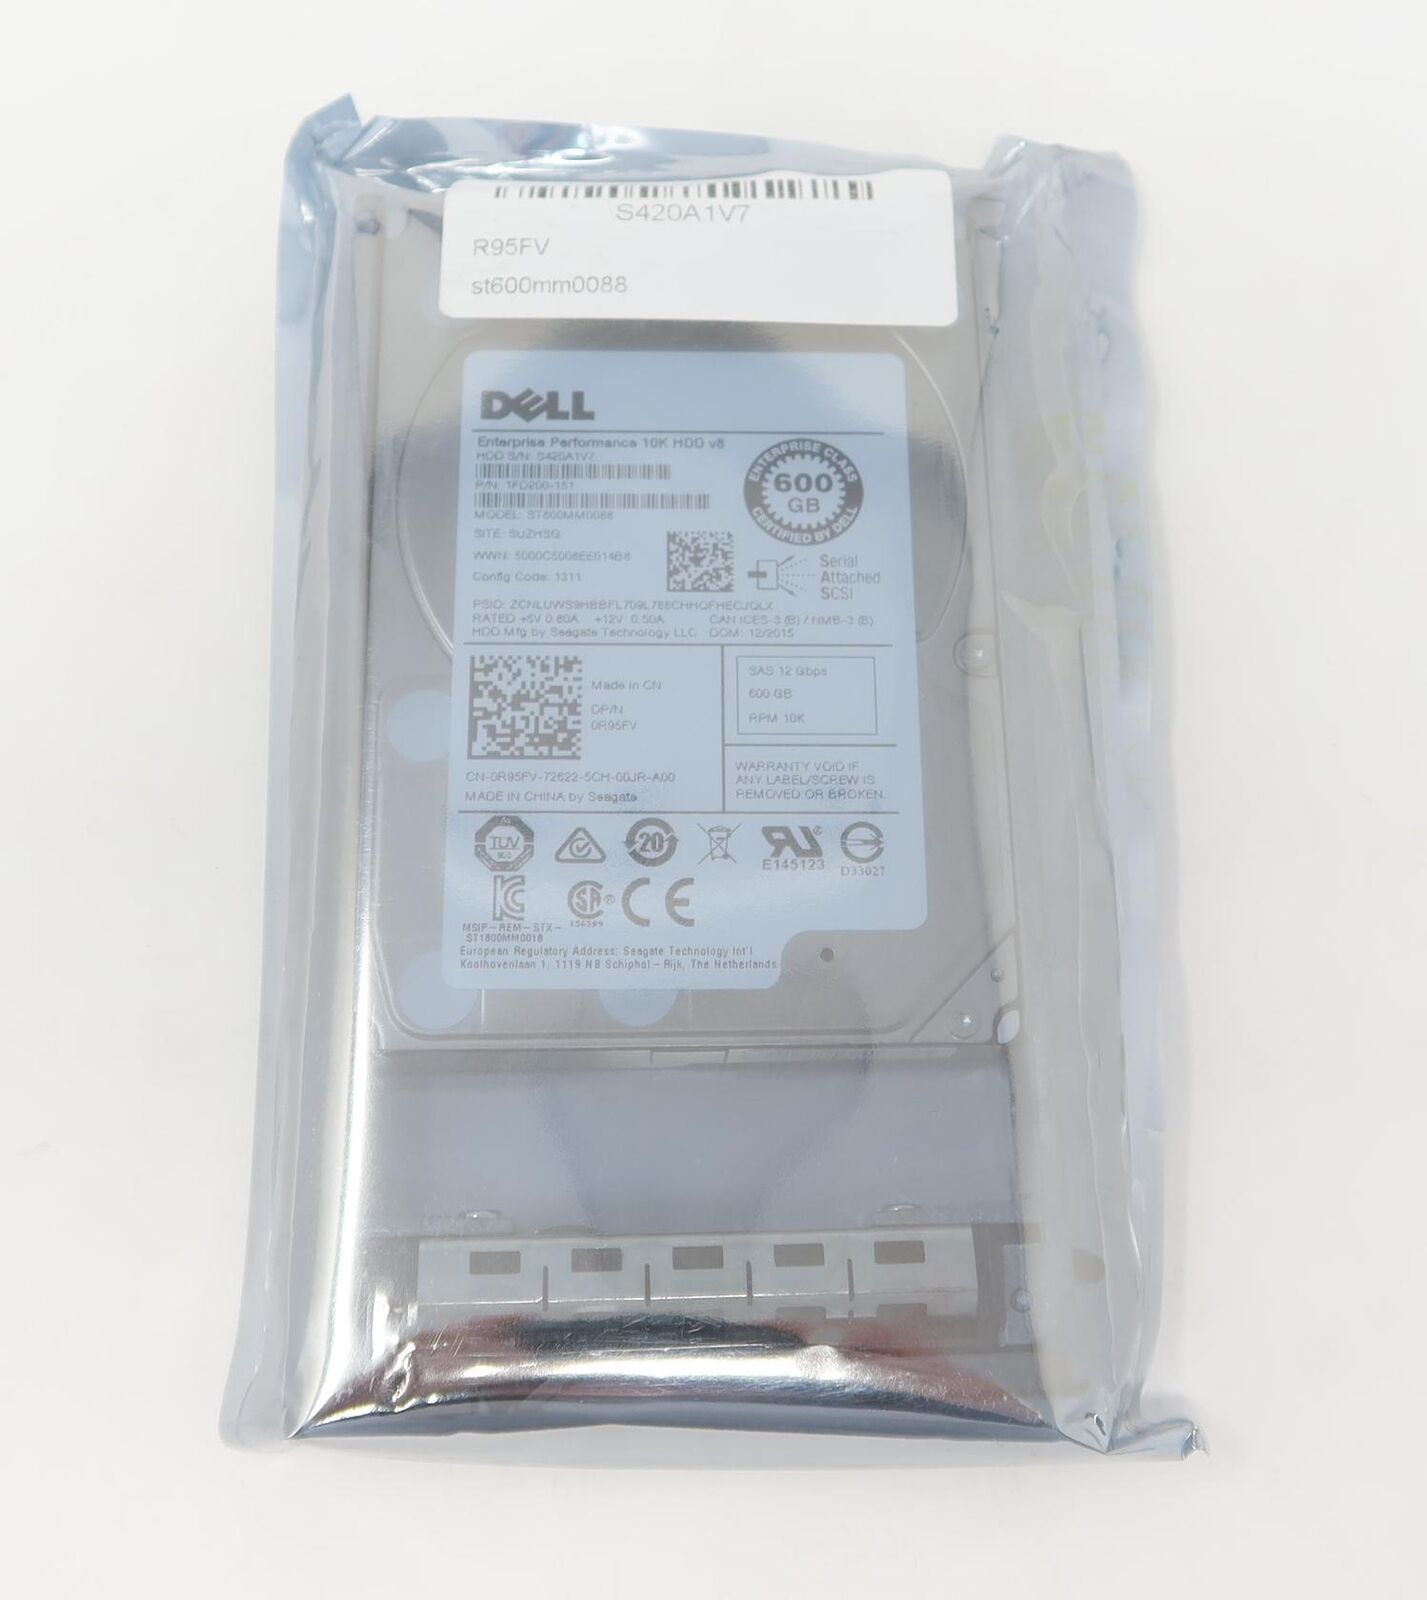 Dell R95FV ST600MM0088 600gb 10k 12G 2.5in SAS Hard Drive